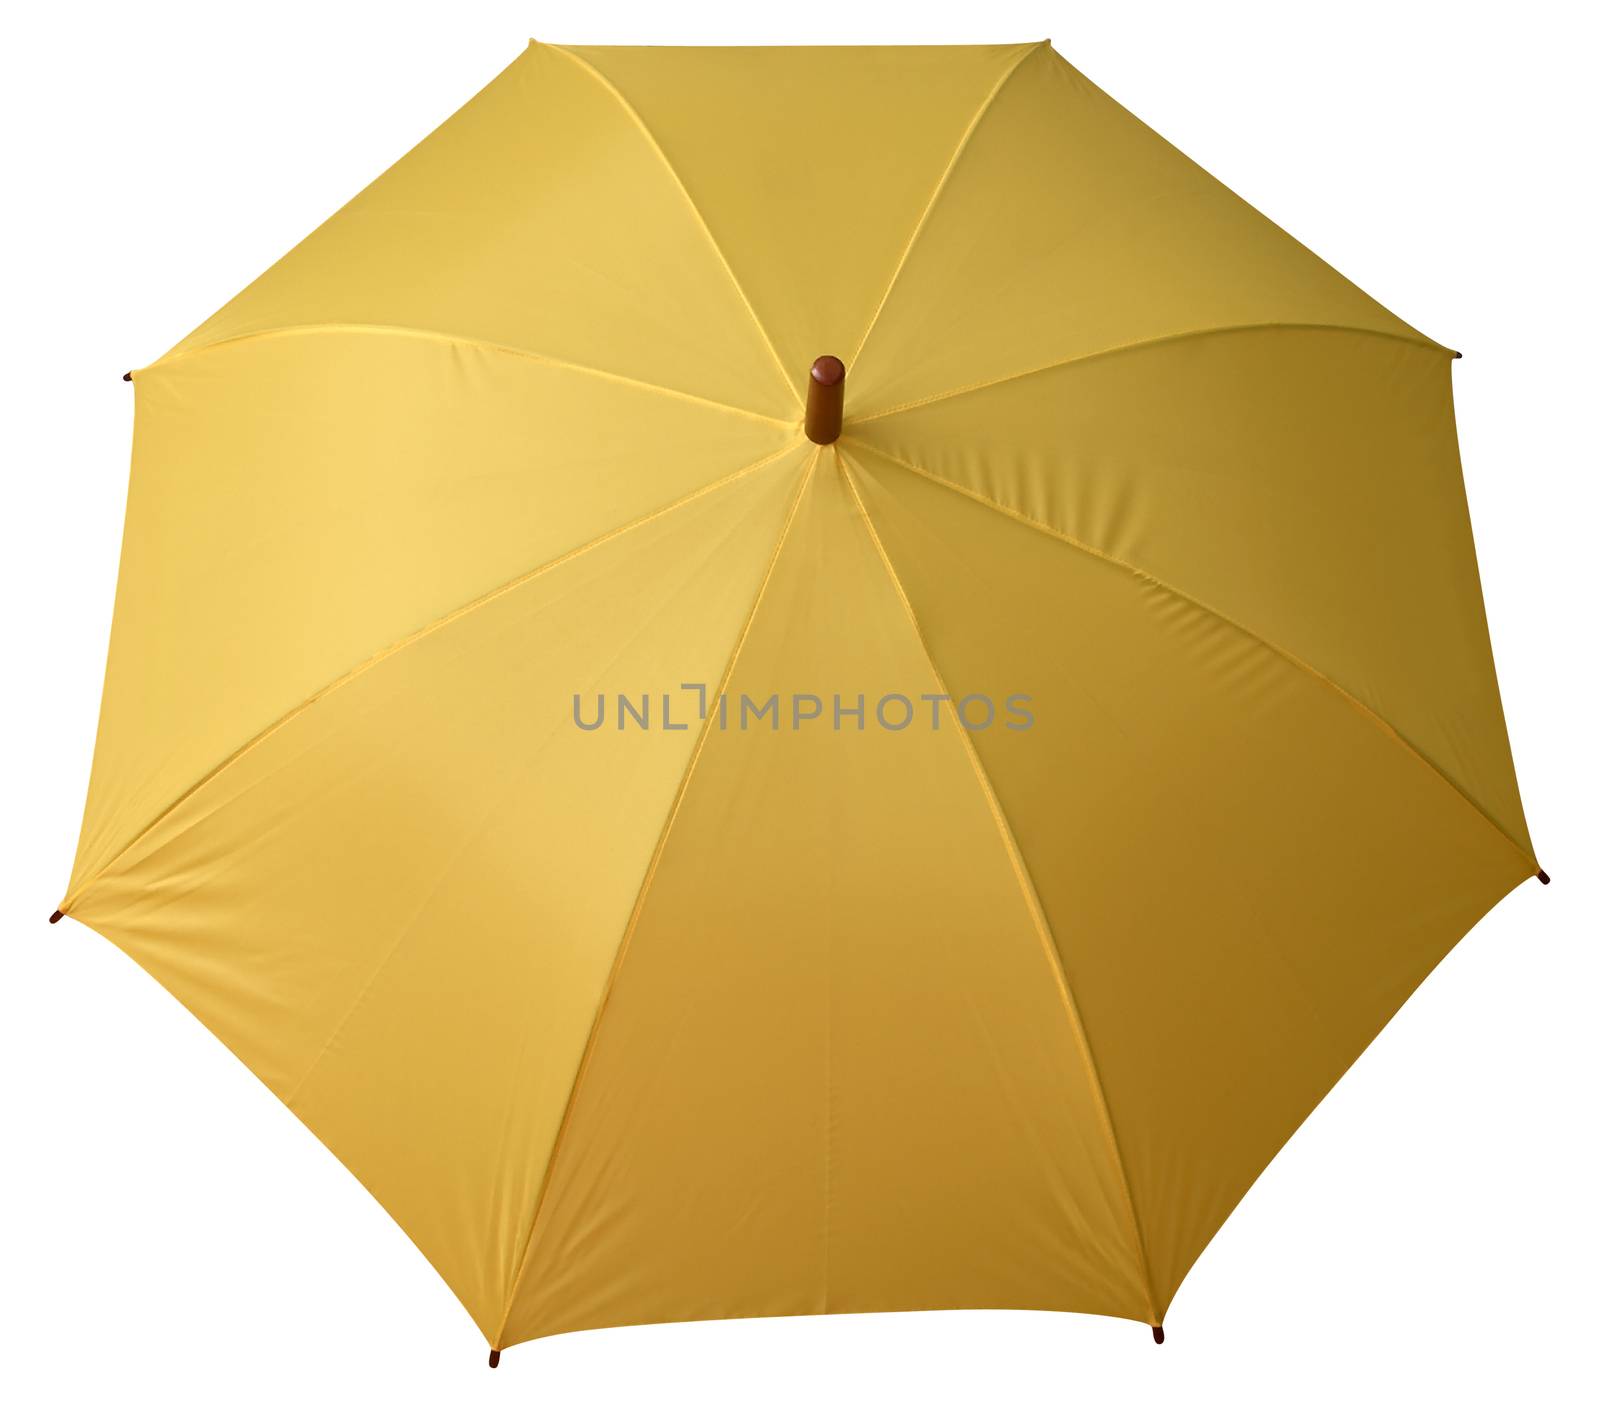 umbrella yellow opened by Venakr